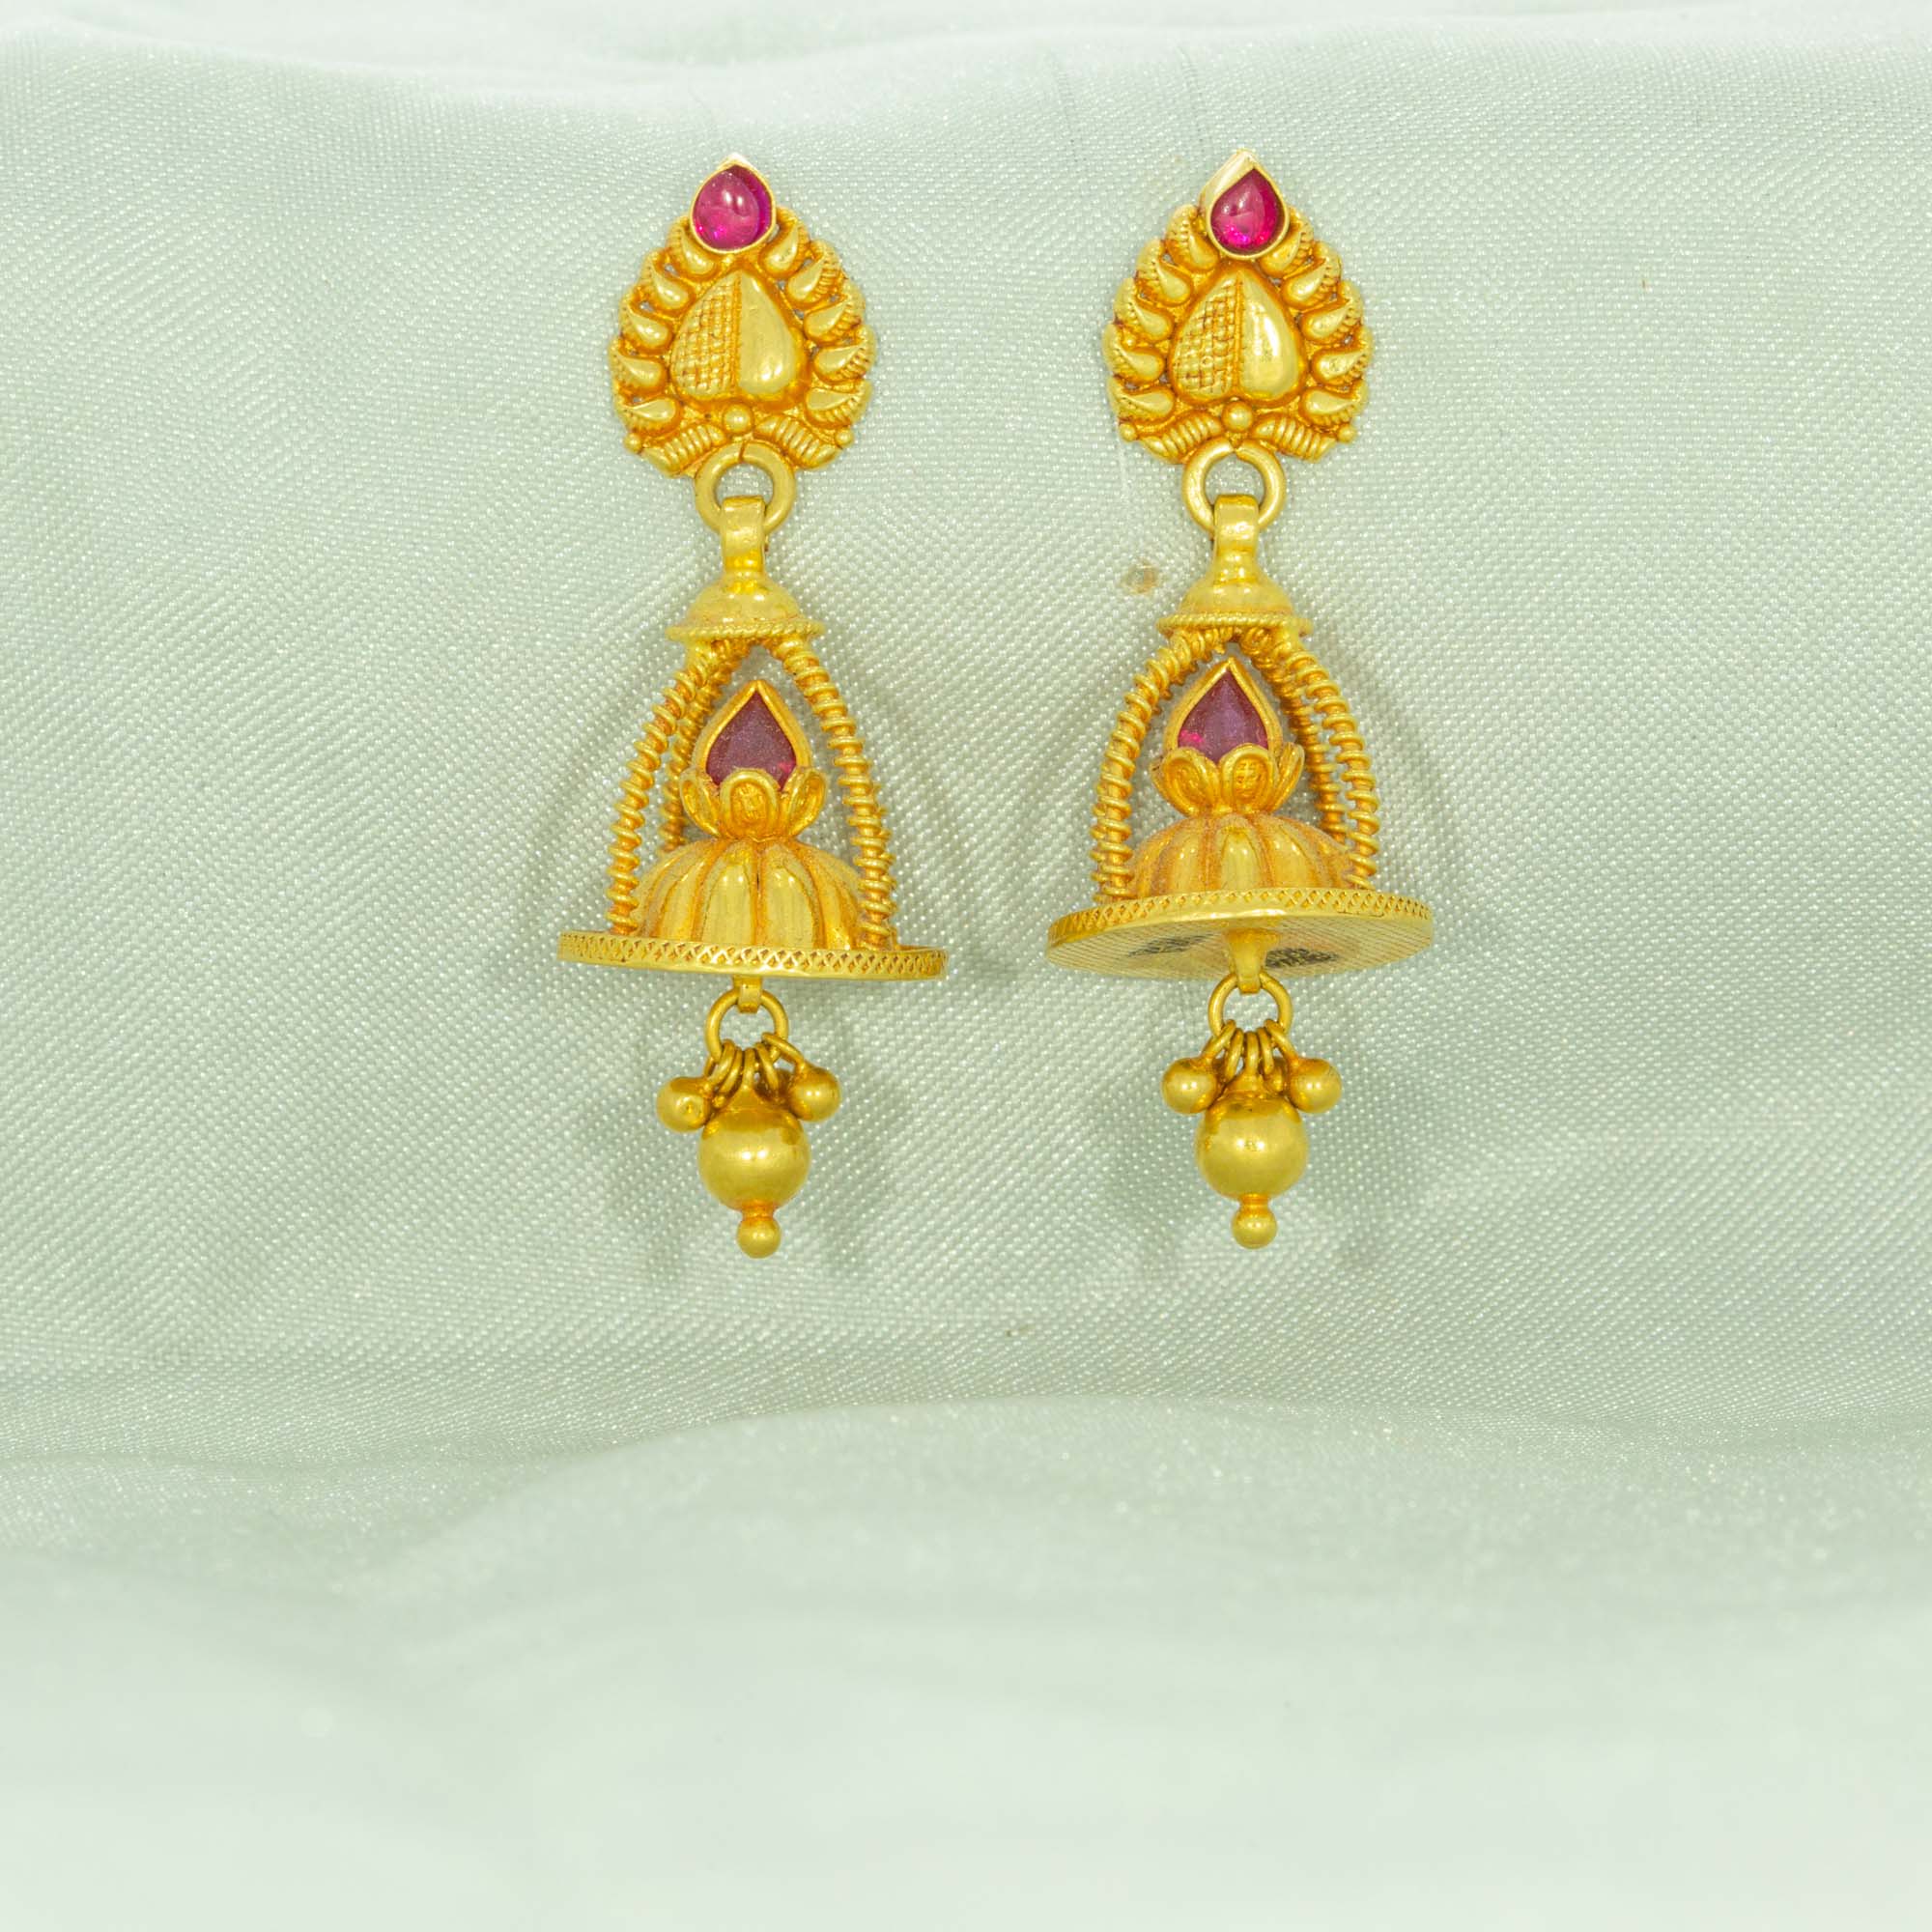 Alluring gold 22kt jhumka earrings